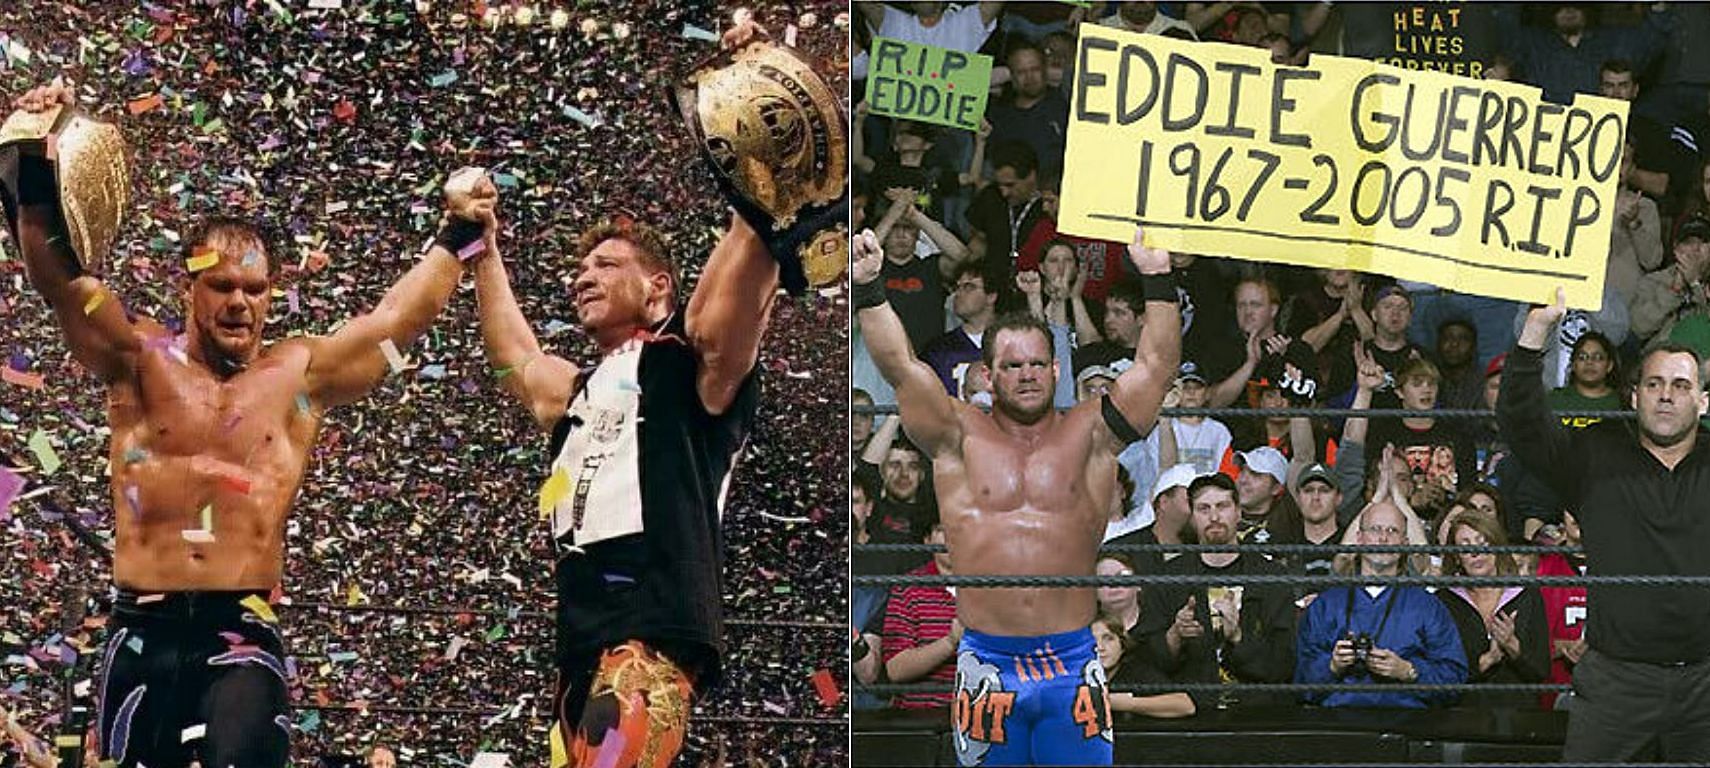 Eddie Guerrero and Chris Benoit were close friends 